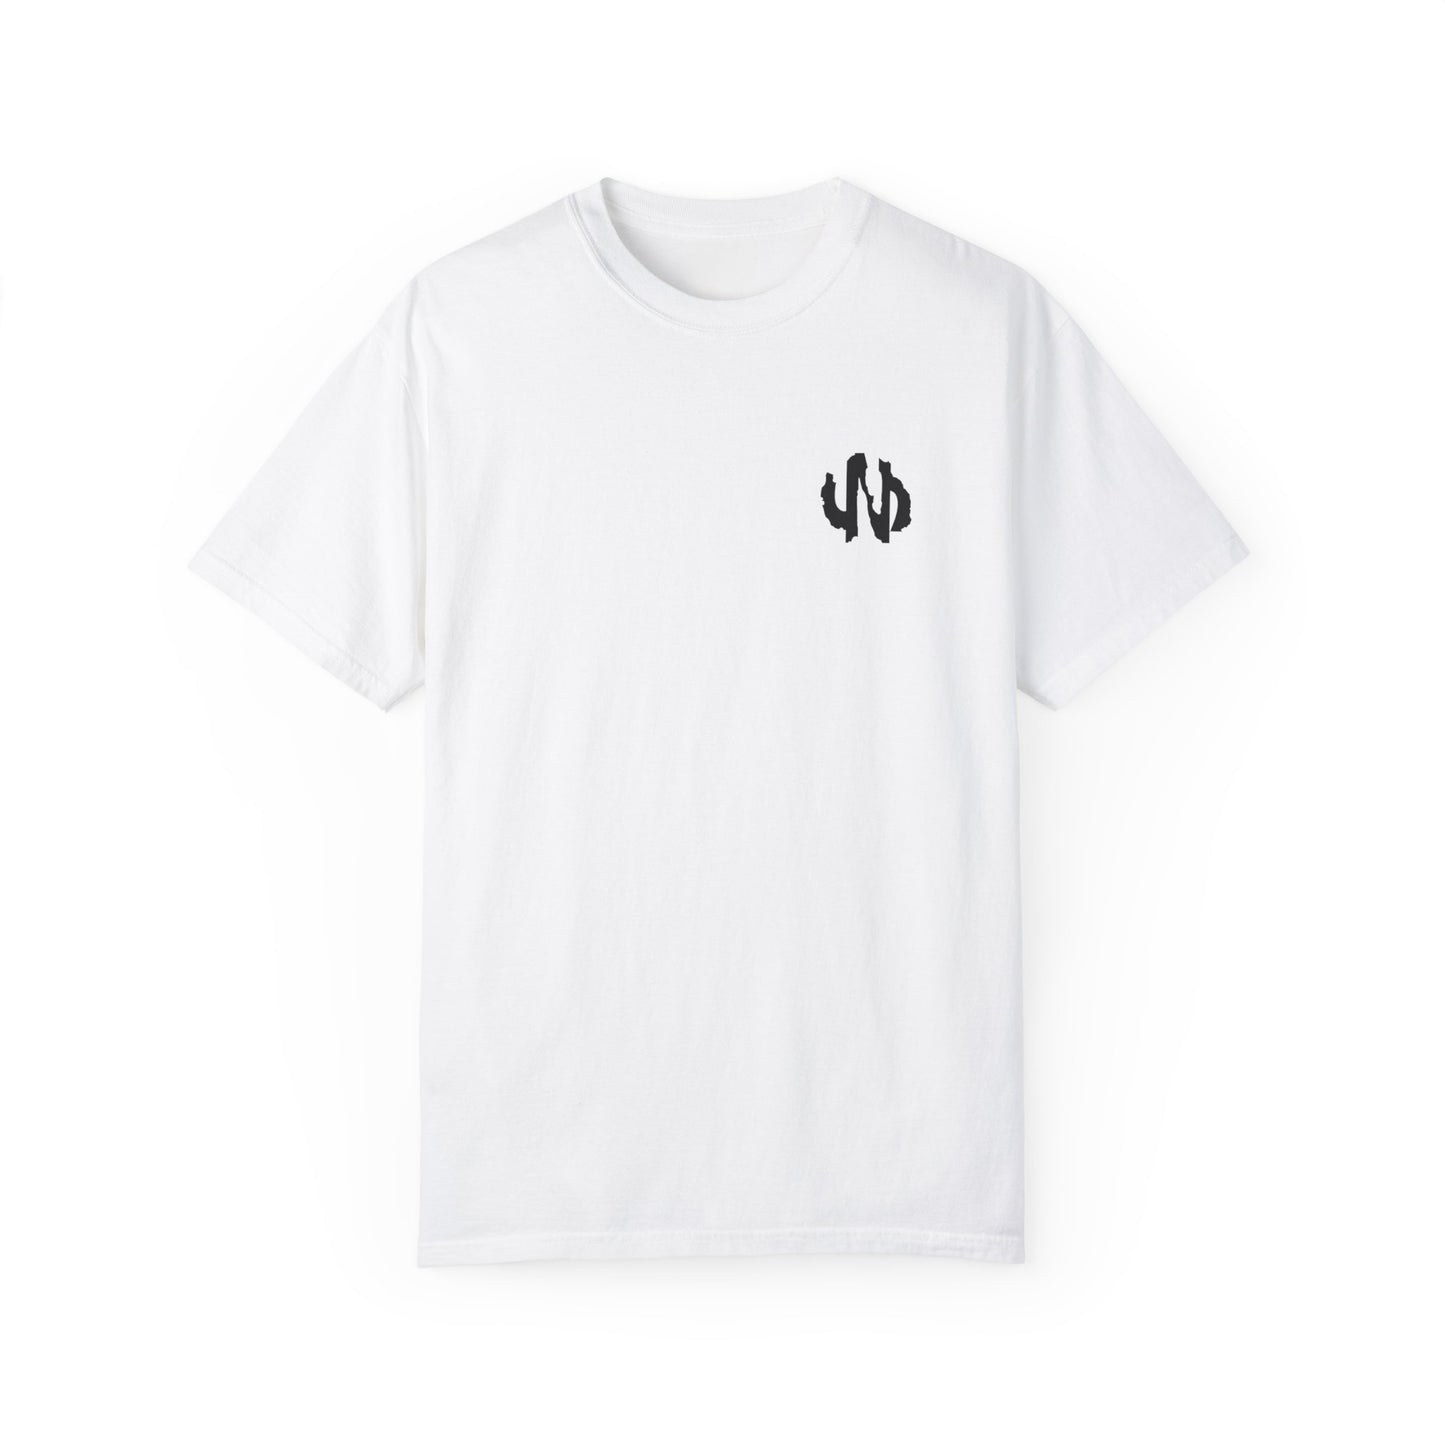 Unisex T-shirt cougar design